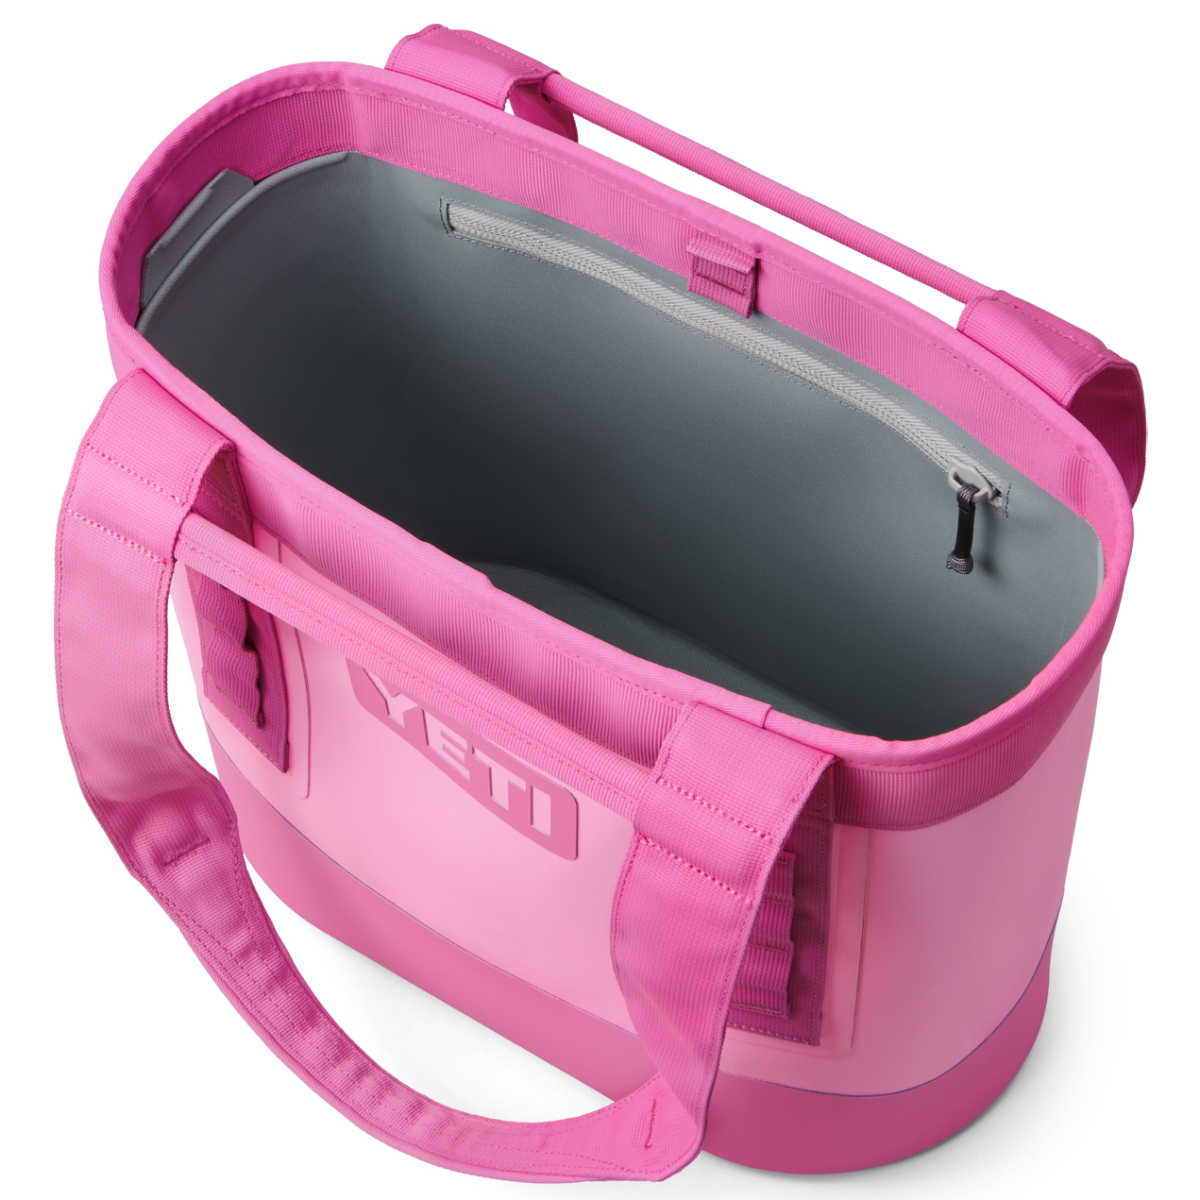 Yeti Camino Carryall 20 -💕 Power Pink - Tote Bag ! NWT! Flash Sale!!